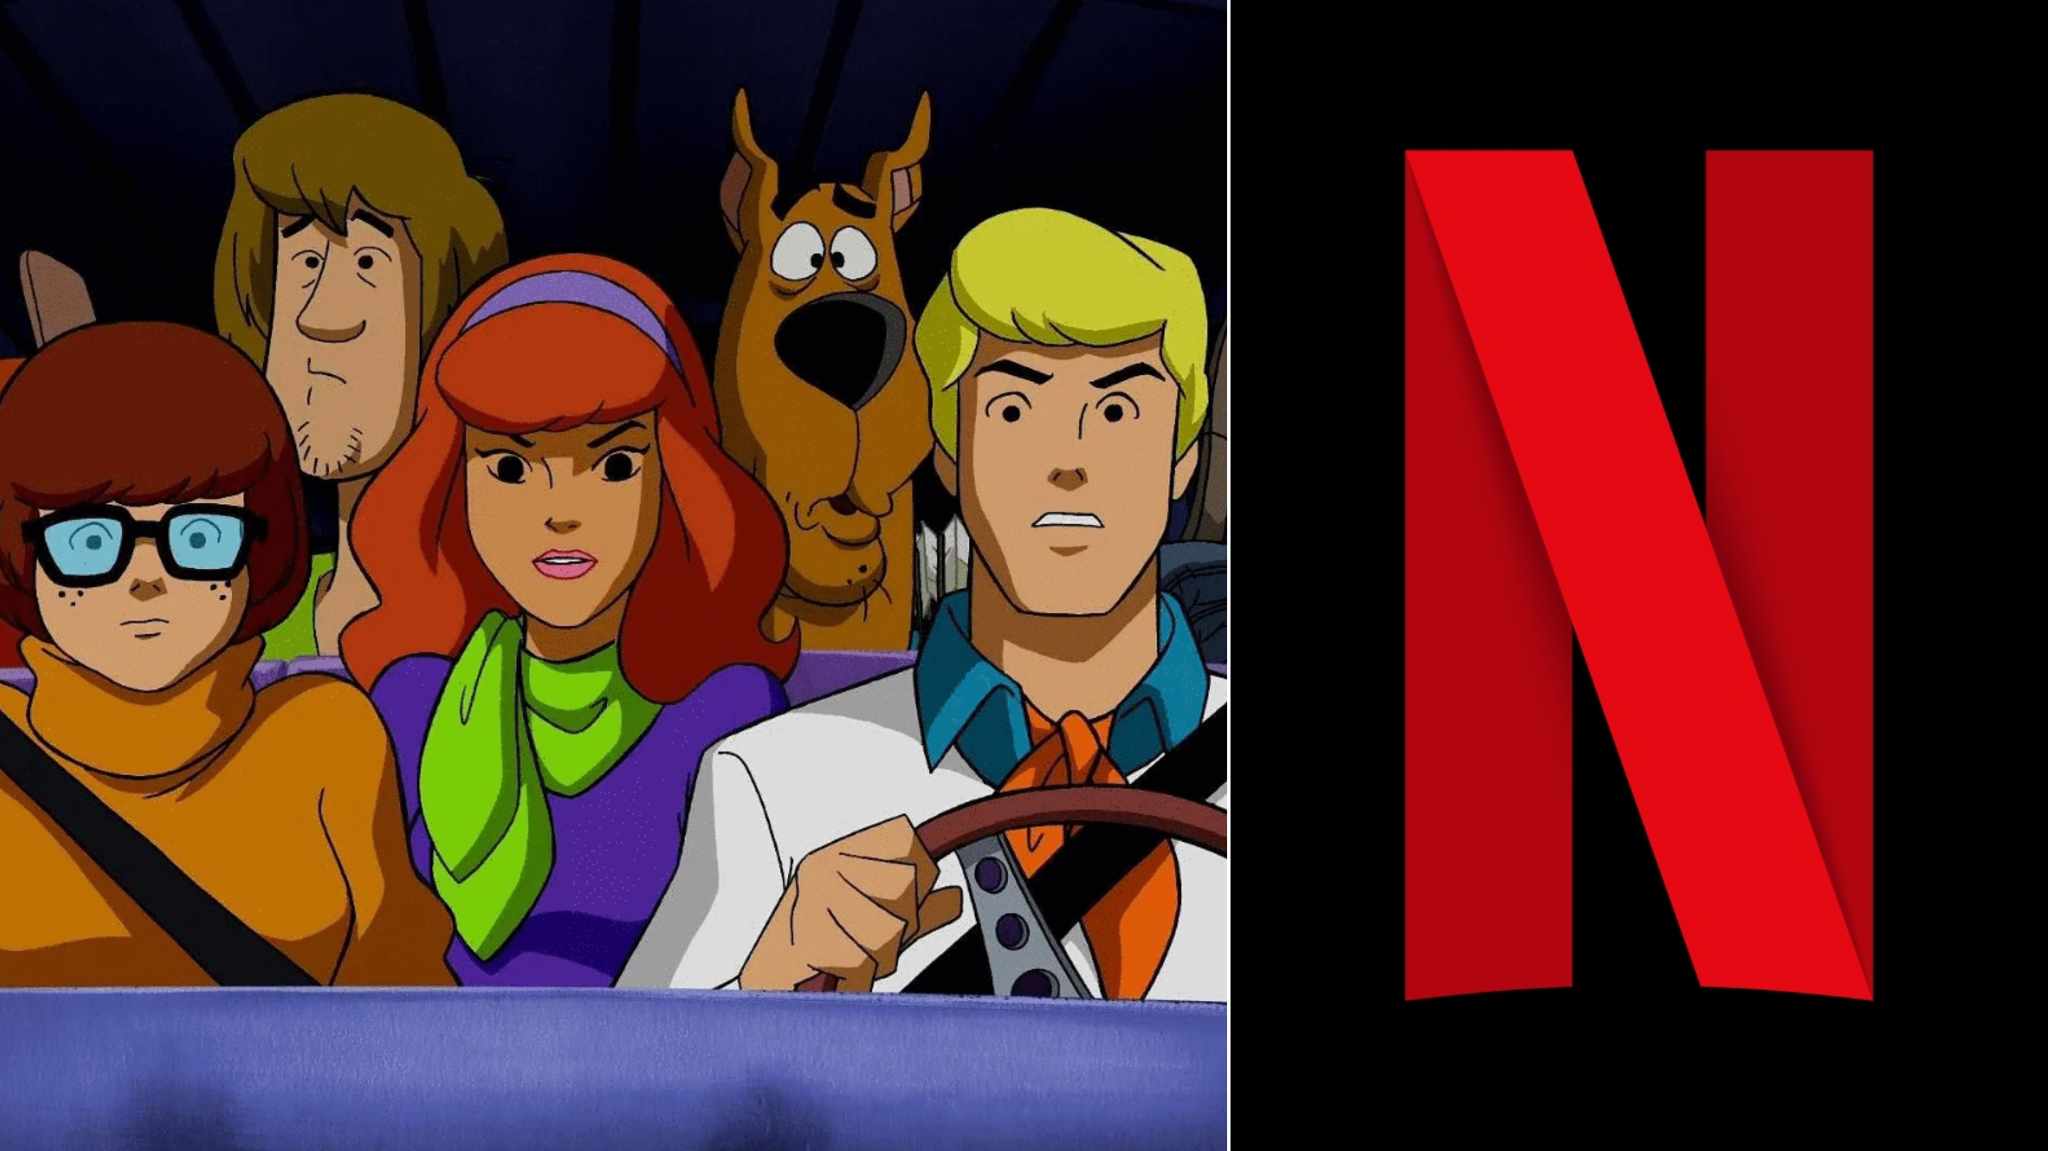 Scooby Doo!: in sviluppo la nuova serie in live-action targata Netflix